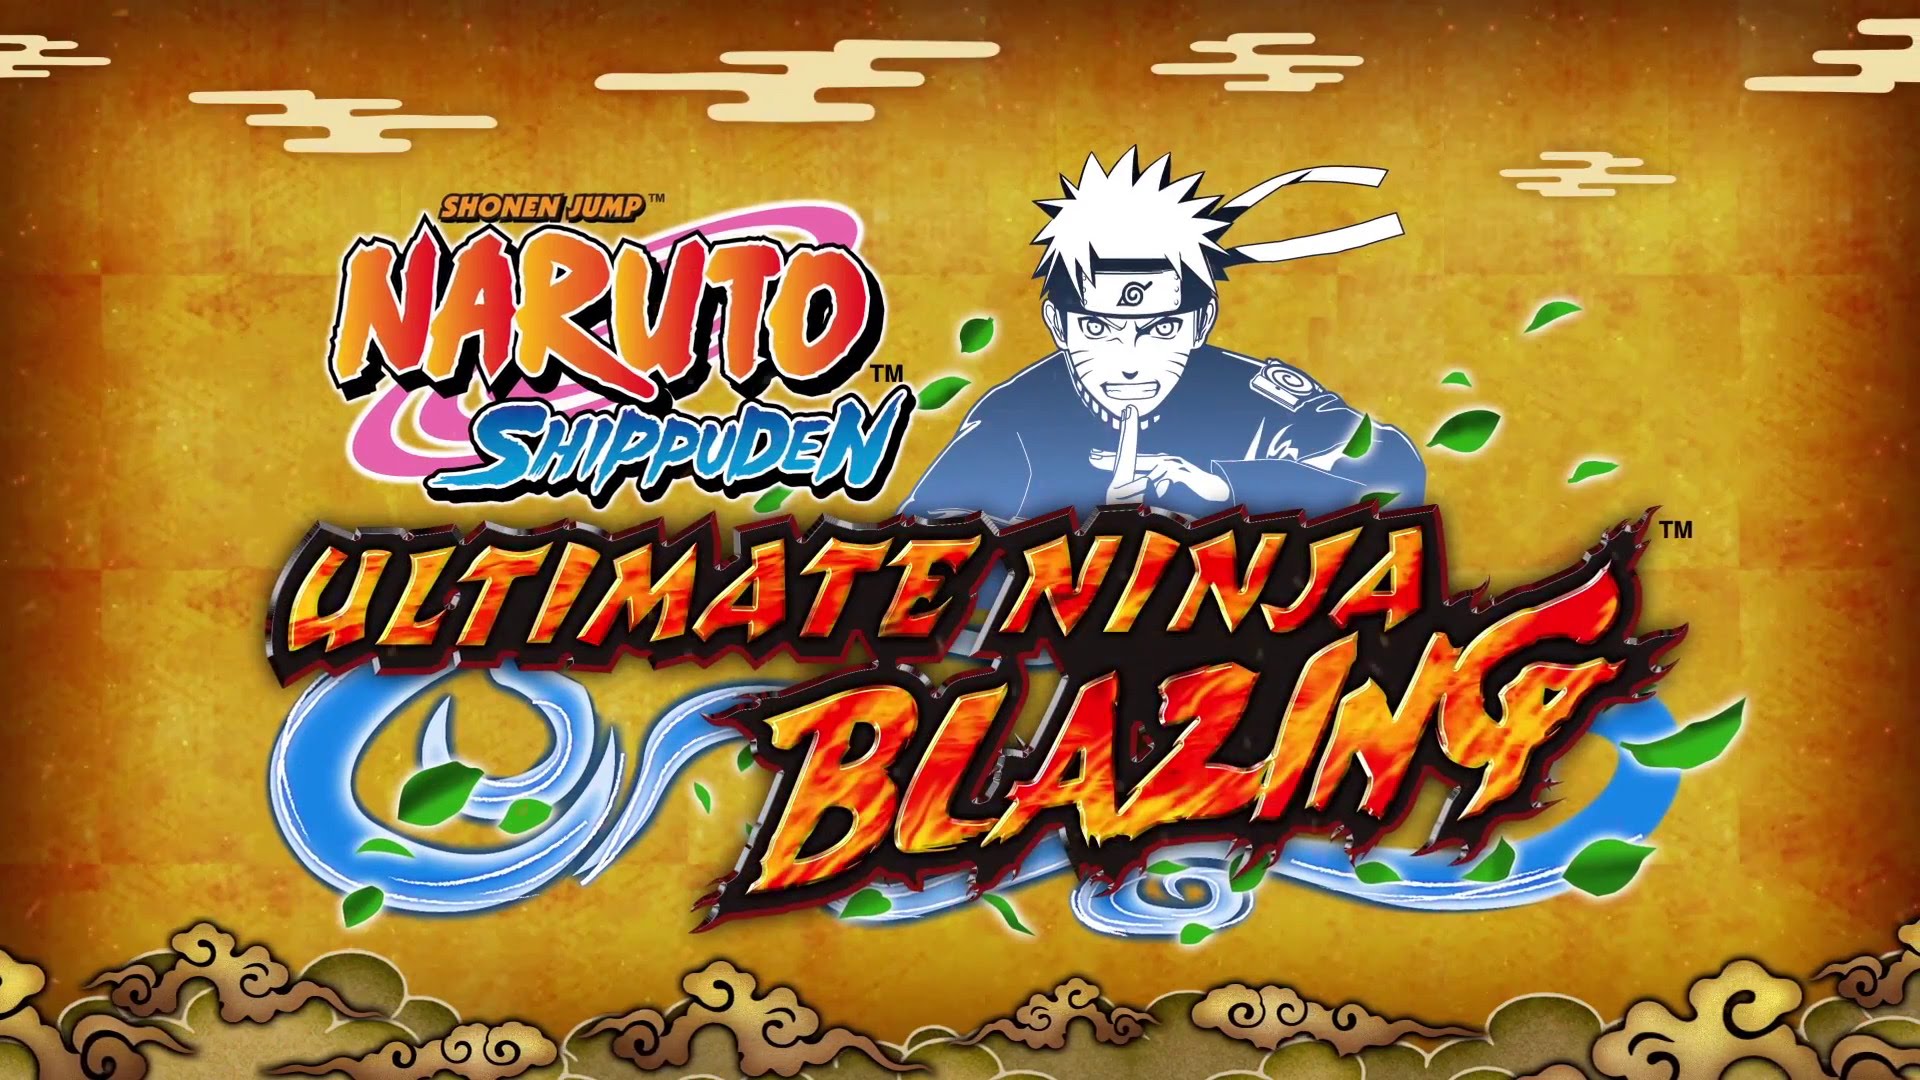 Ultimate Ninja Blazing